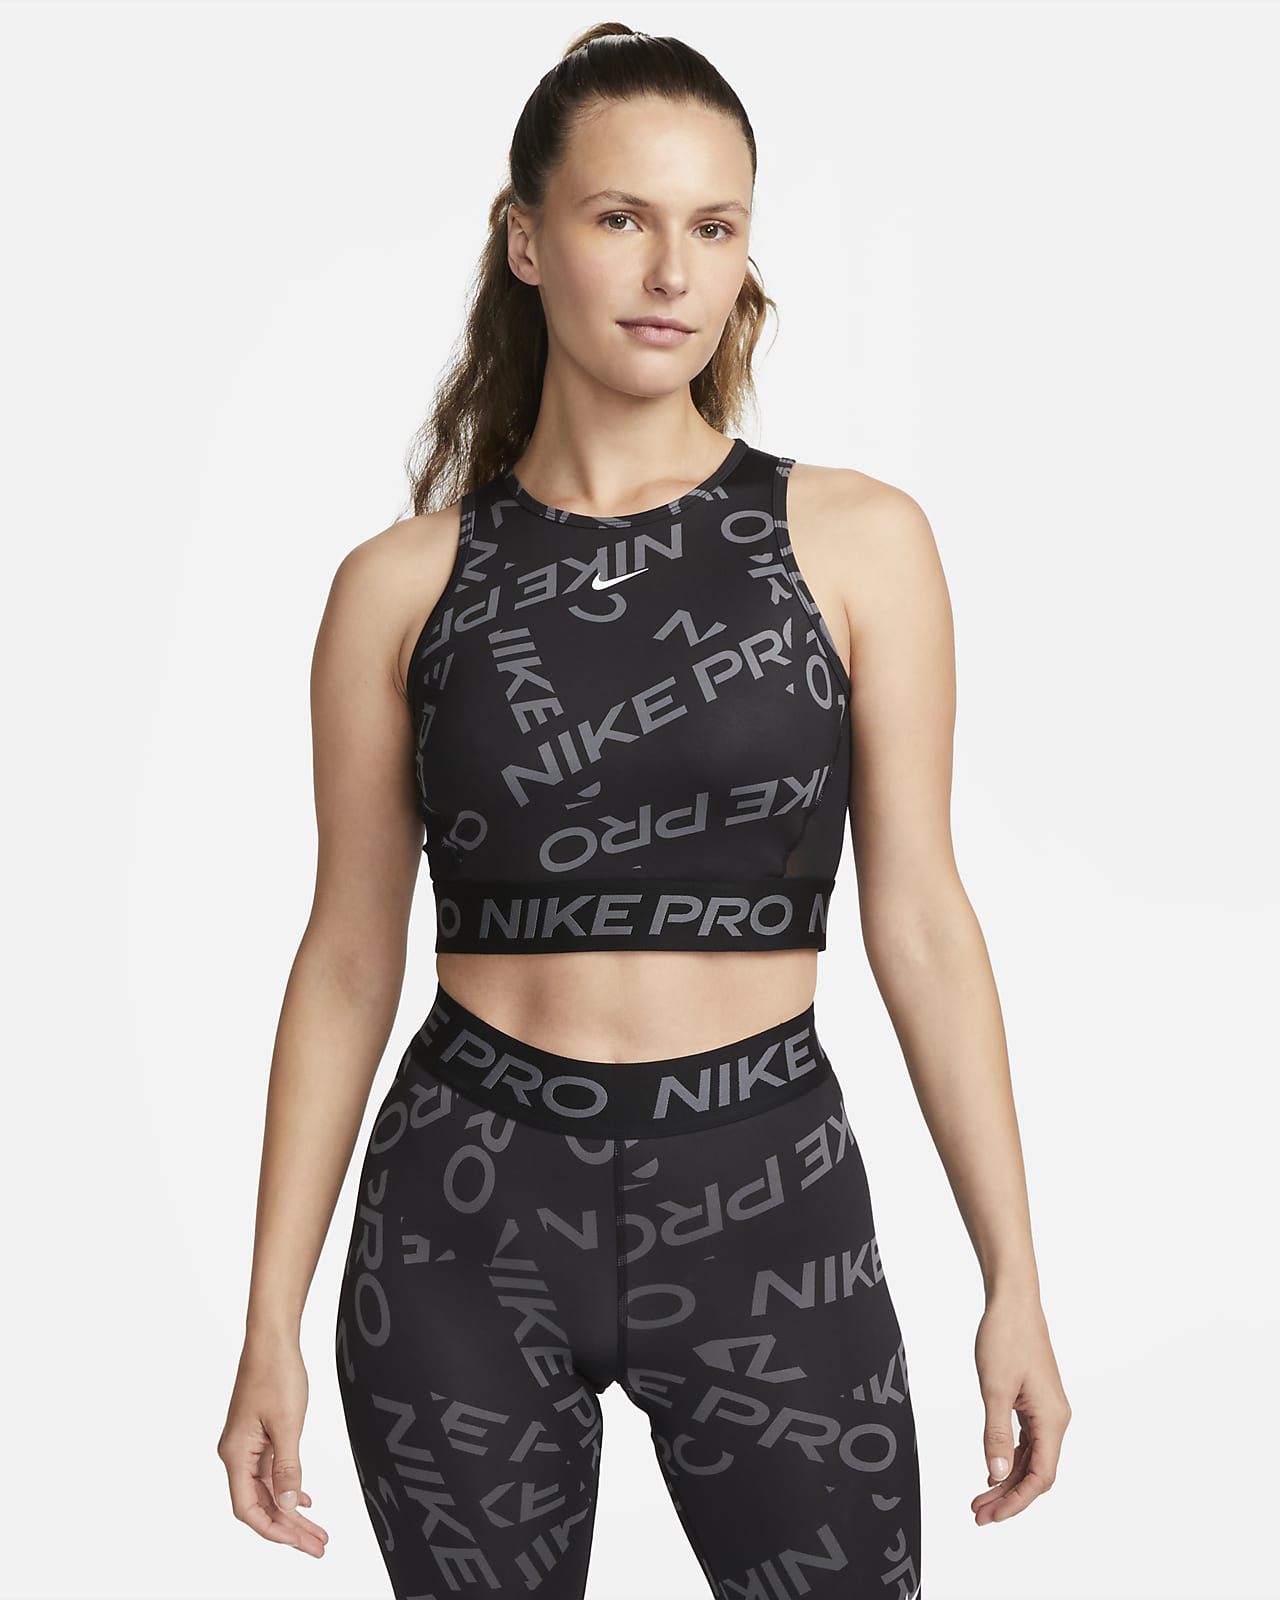 Nike Pro Dri-FIT Women's Cropped Long-Sleeve Top.